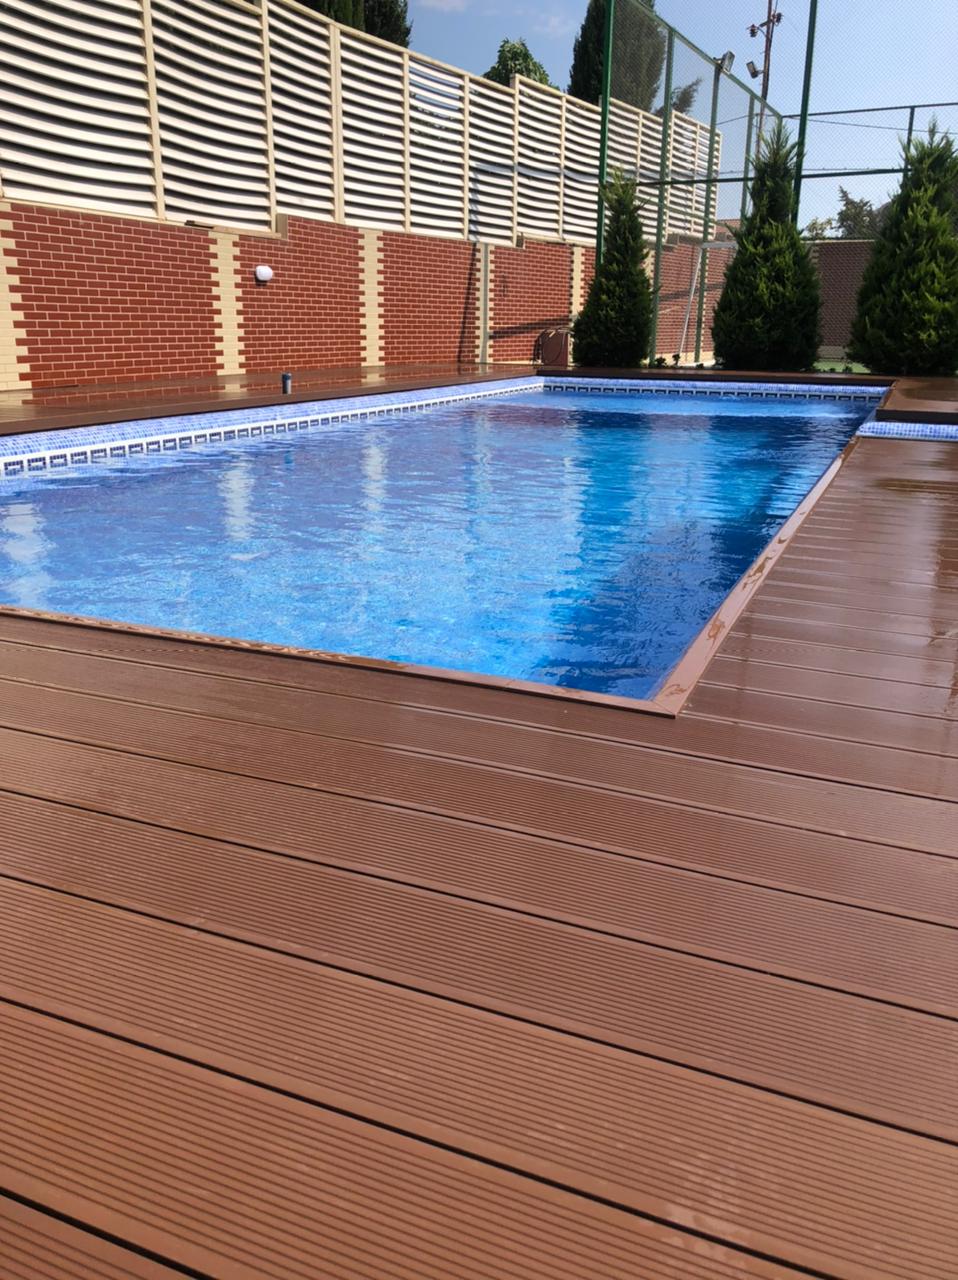 Pool side decking